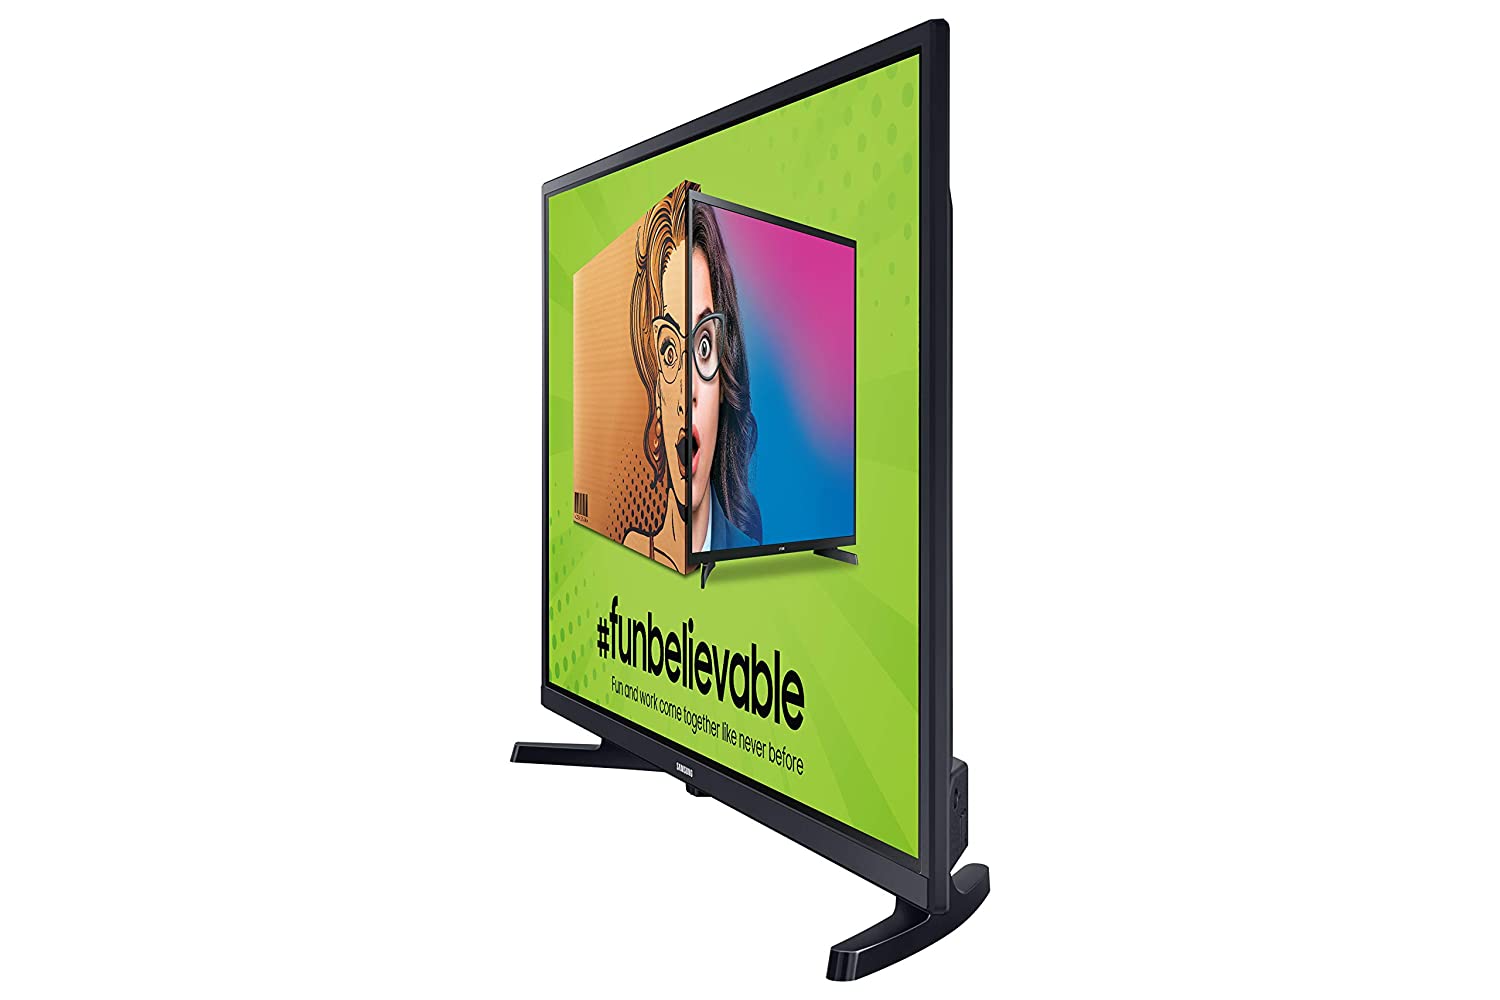 Samsung 80 cm (32 inches) UA32T4310AKXXL HD Ready Smart LED TV  (Glossy Black) (2020 Model)